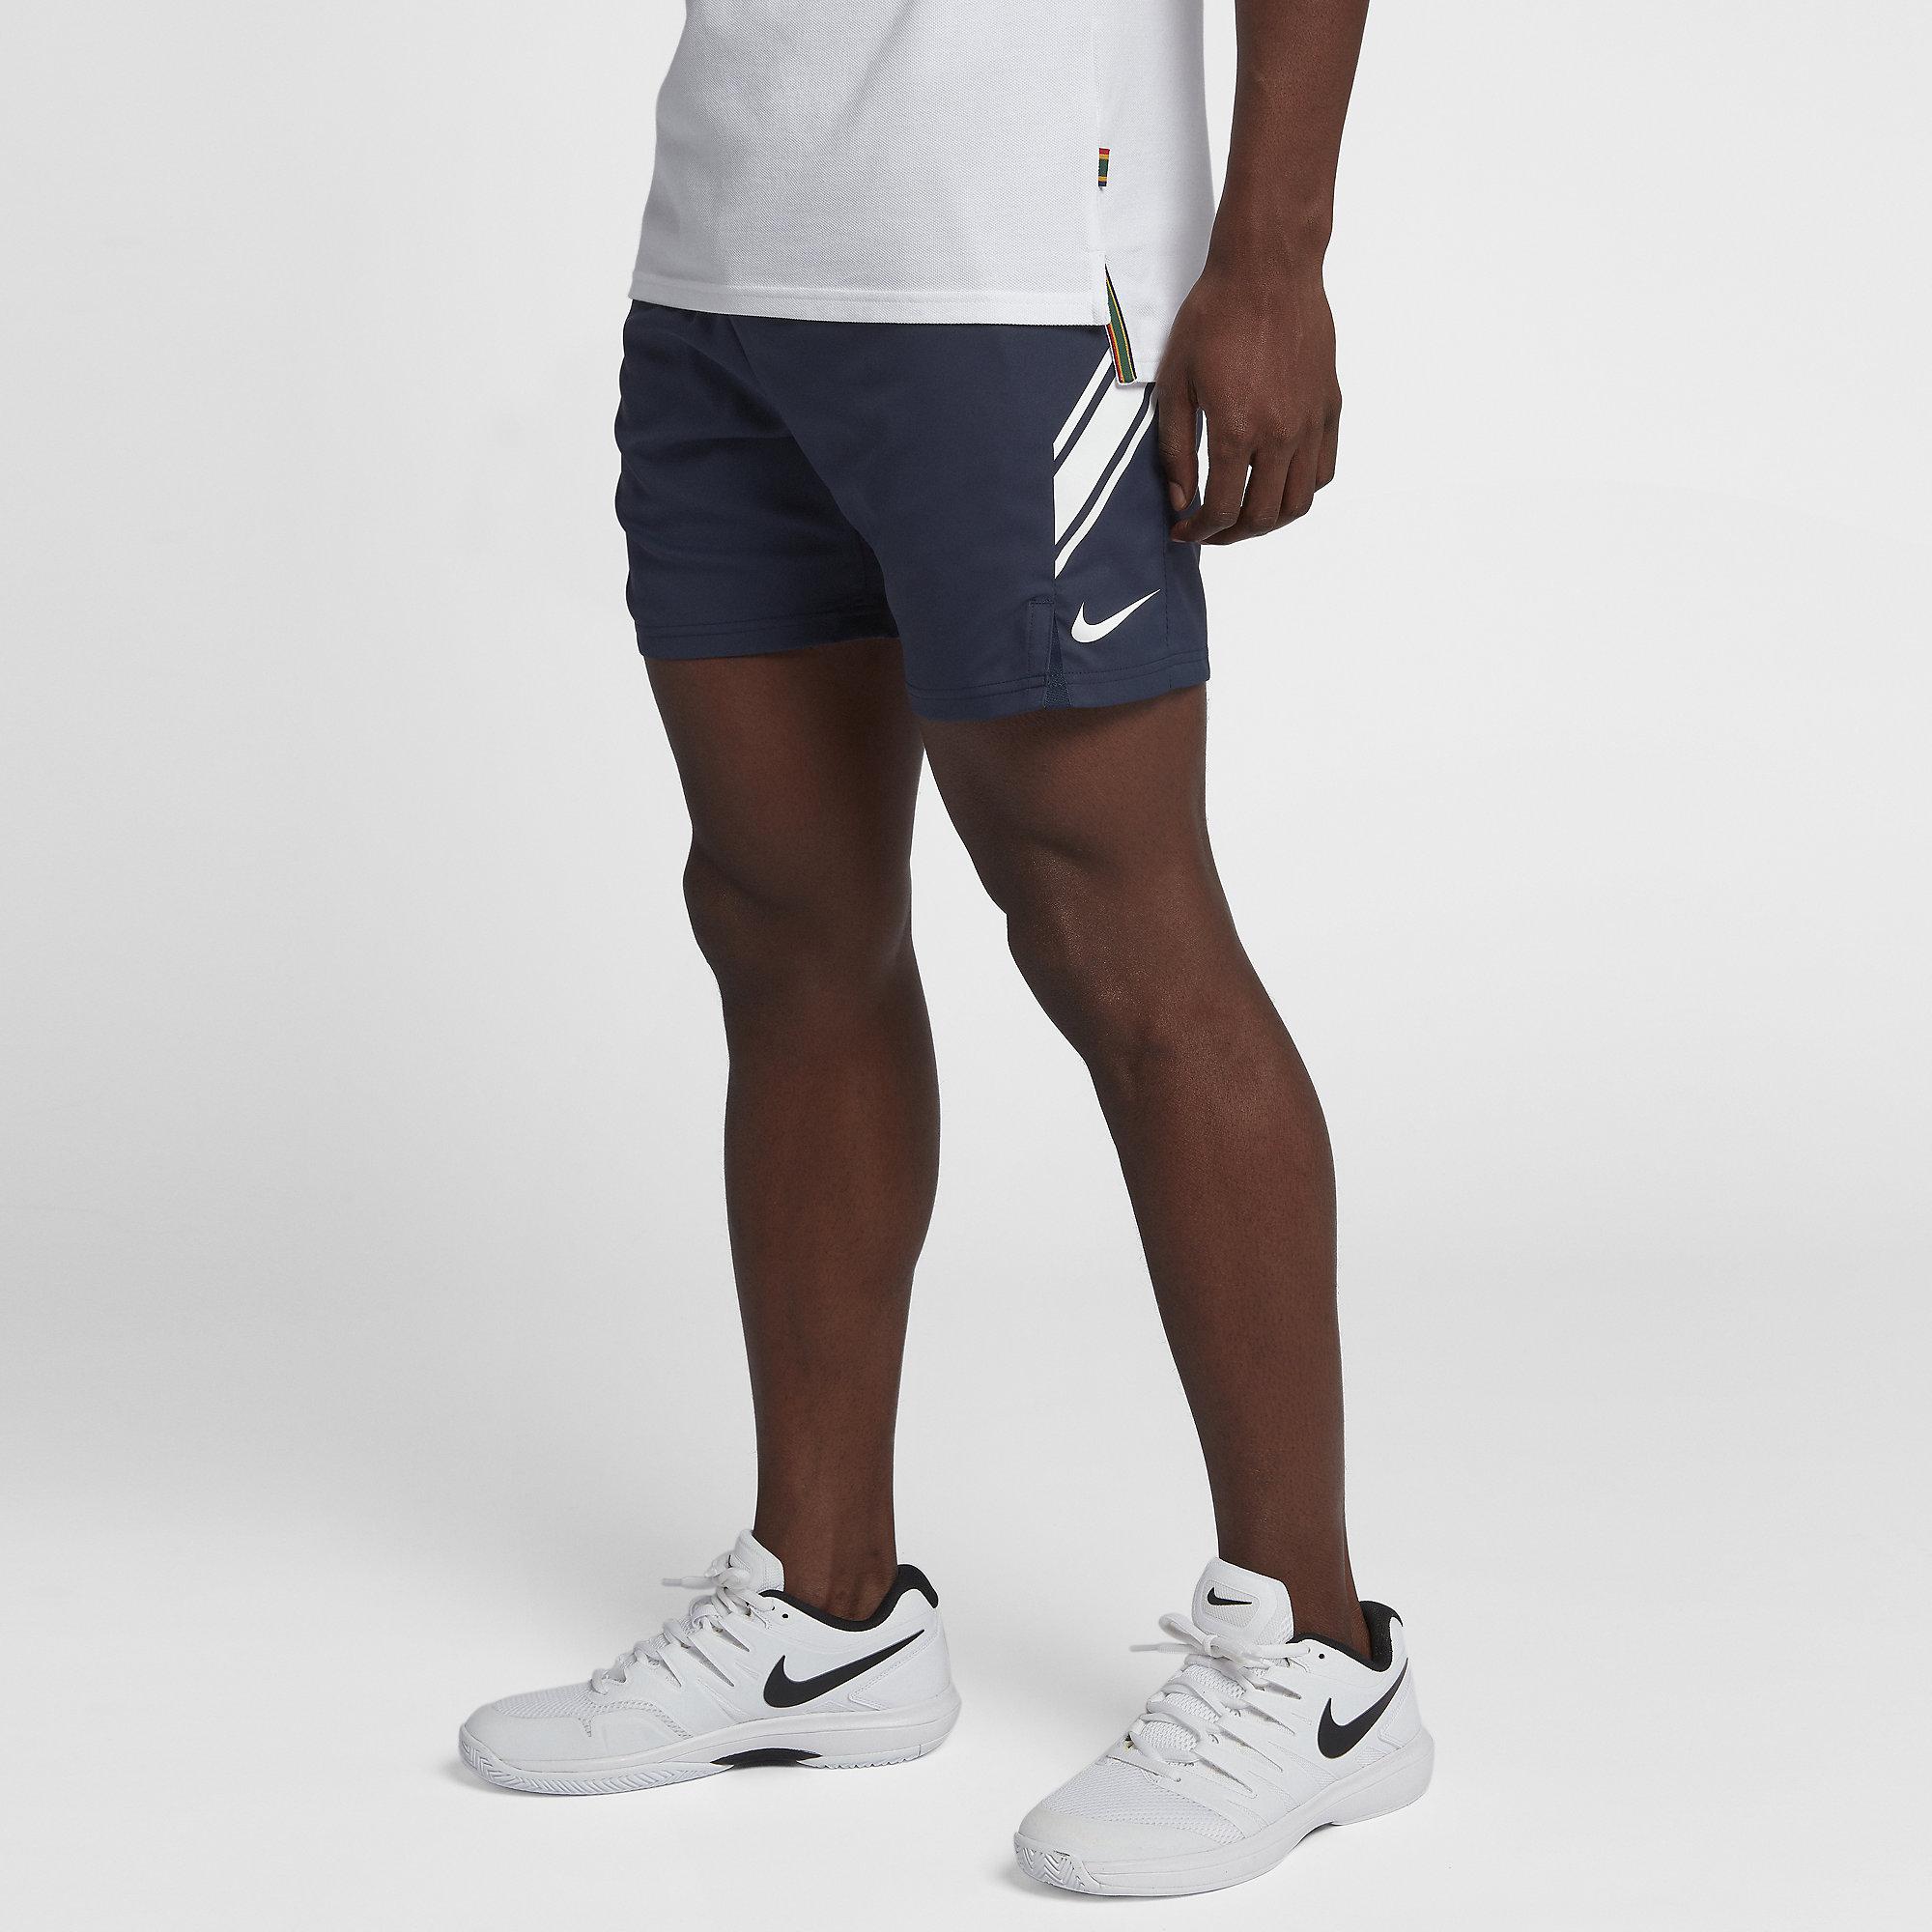 nike men's 7 inch tennis shorts